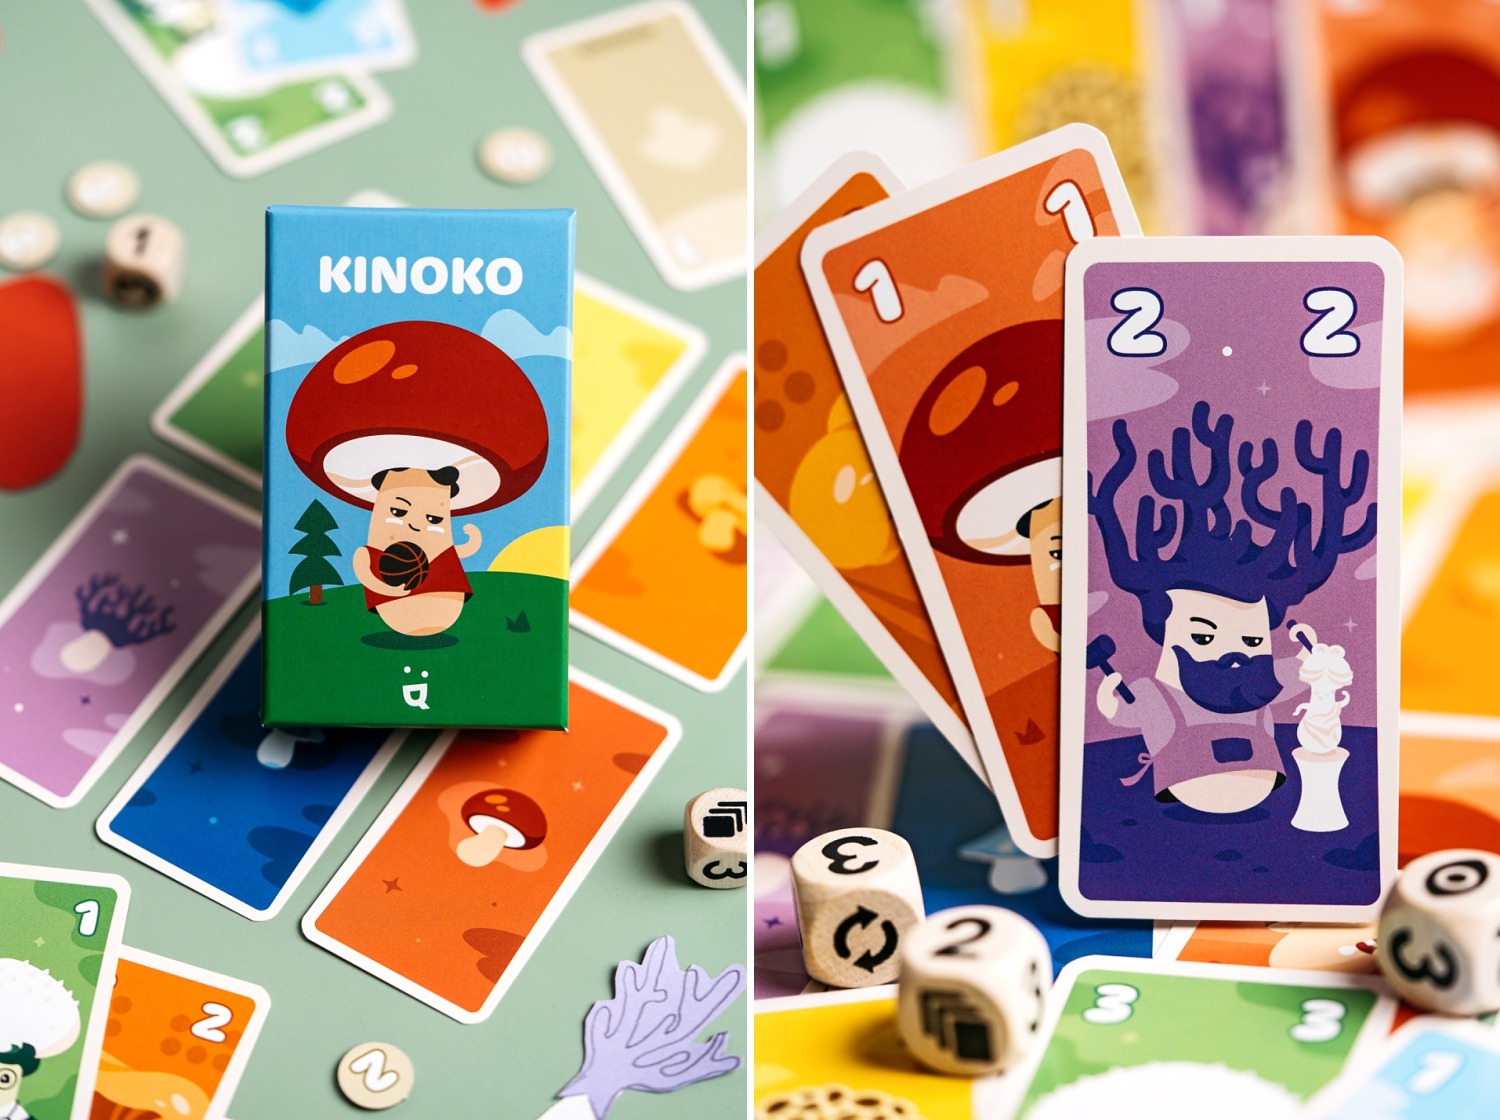 Kinoko Helvetiq jeu de société boardgame